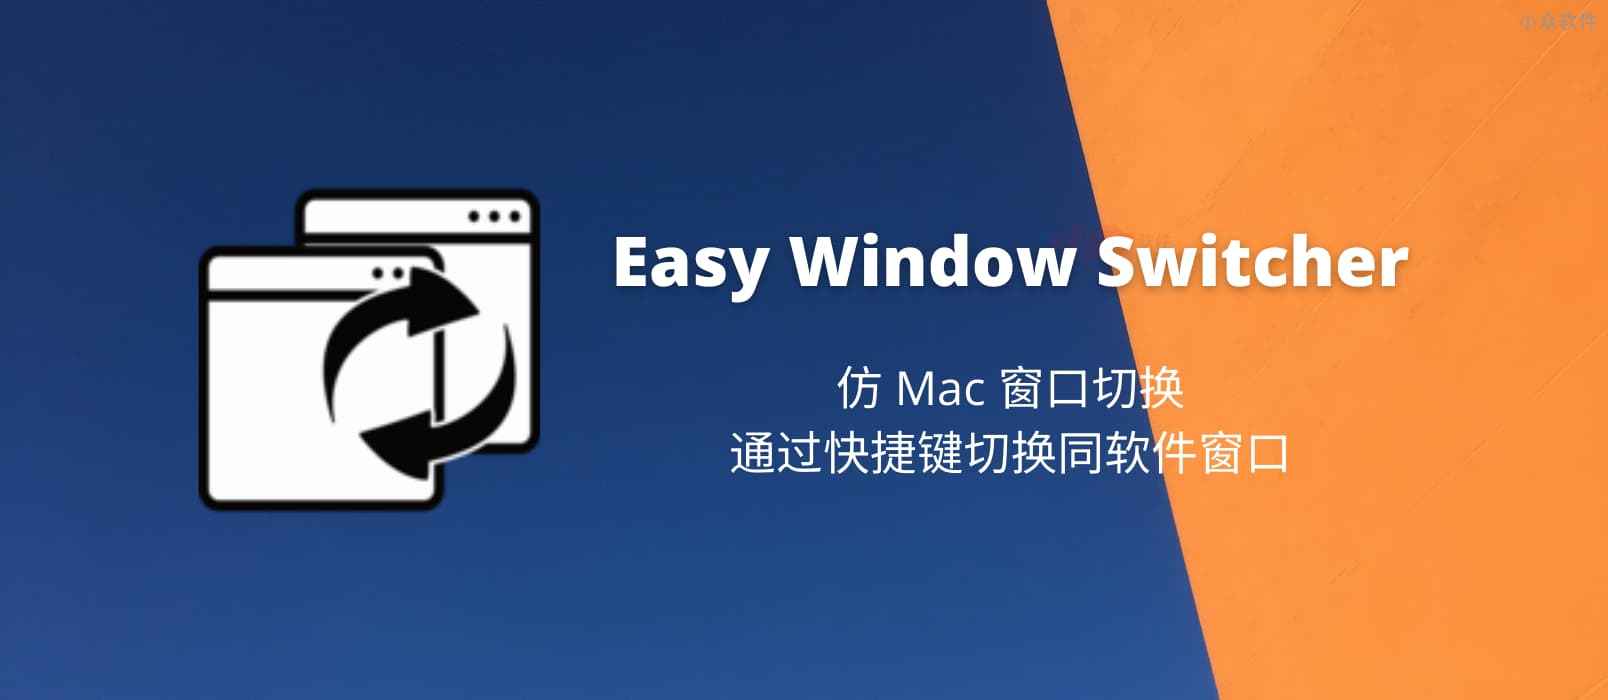 Easy Window Switcher - 仿 Mac 窗口切换，通过快捷键切换同软件窗口[Windows]